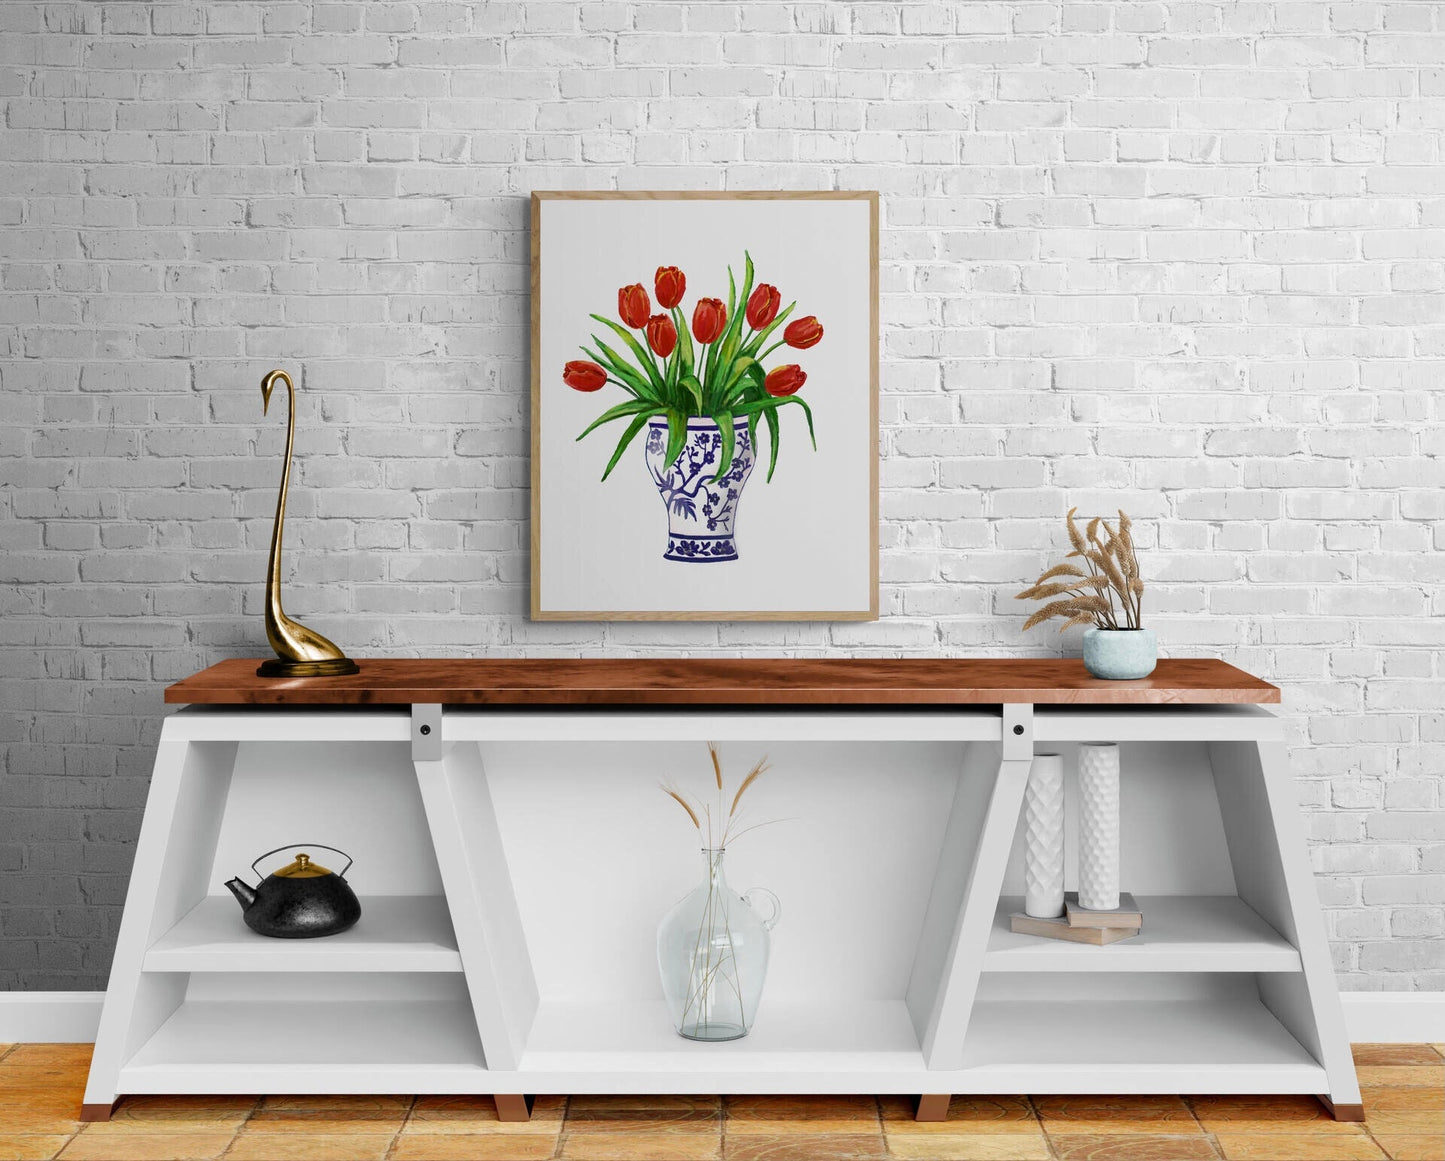 Red Tulips in Vase Art Print, Red Flower Wall Art, Blue and White Planter, Tulip Painting, Flower Illustration, Farmhouse Decor